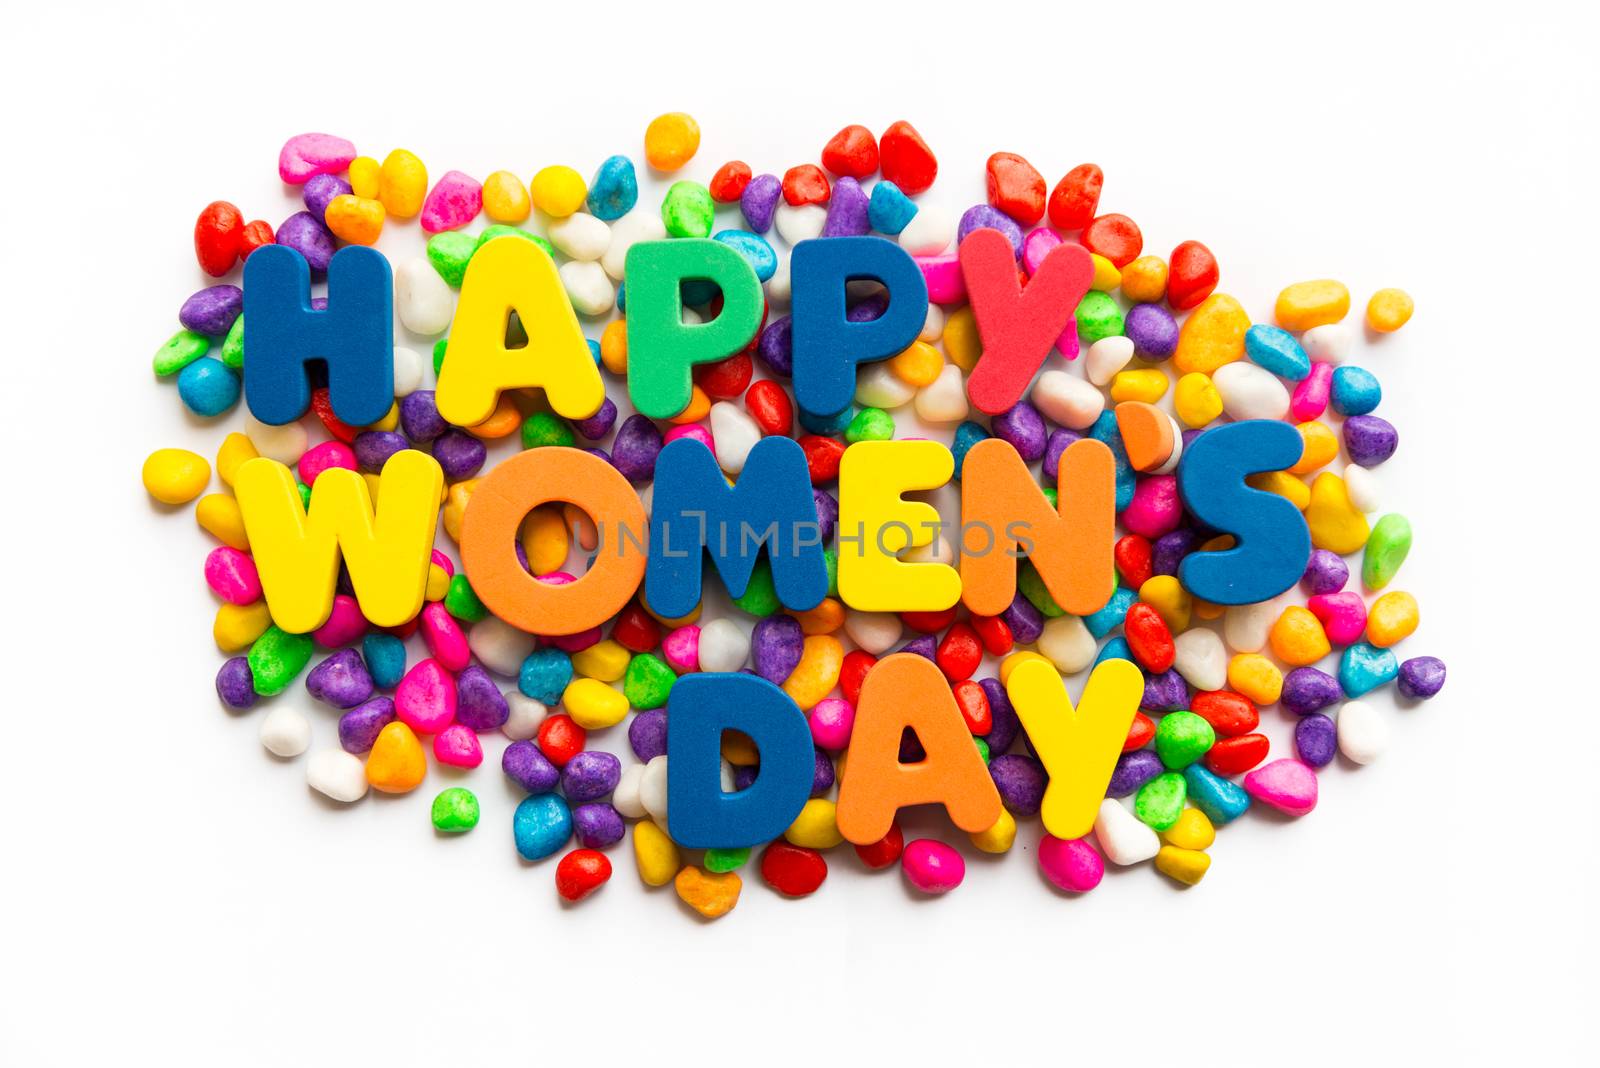 Happy Women's Day by sohel.parvez@hotmail.com